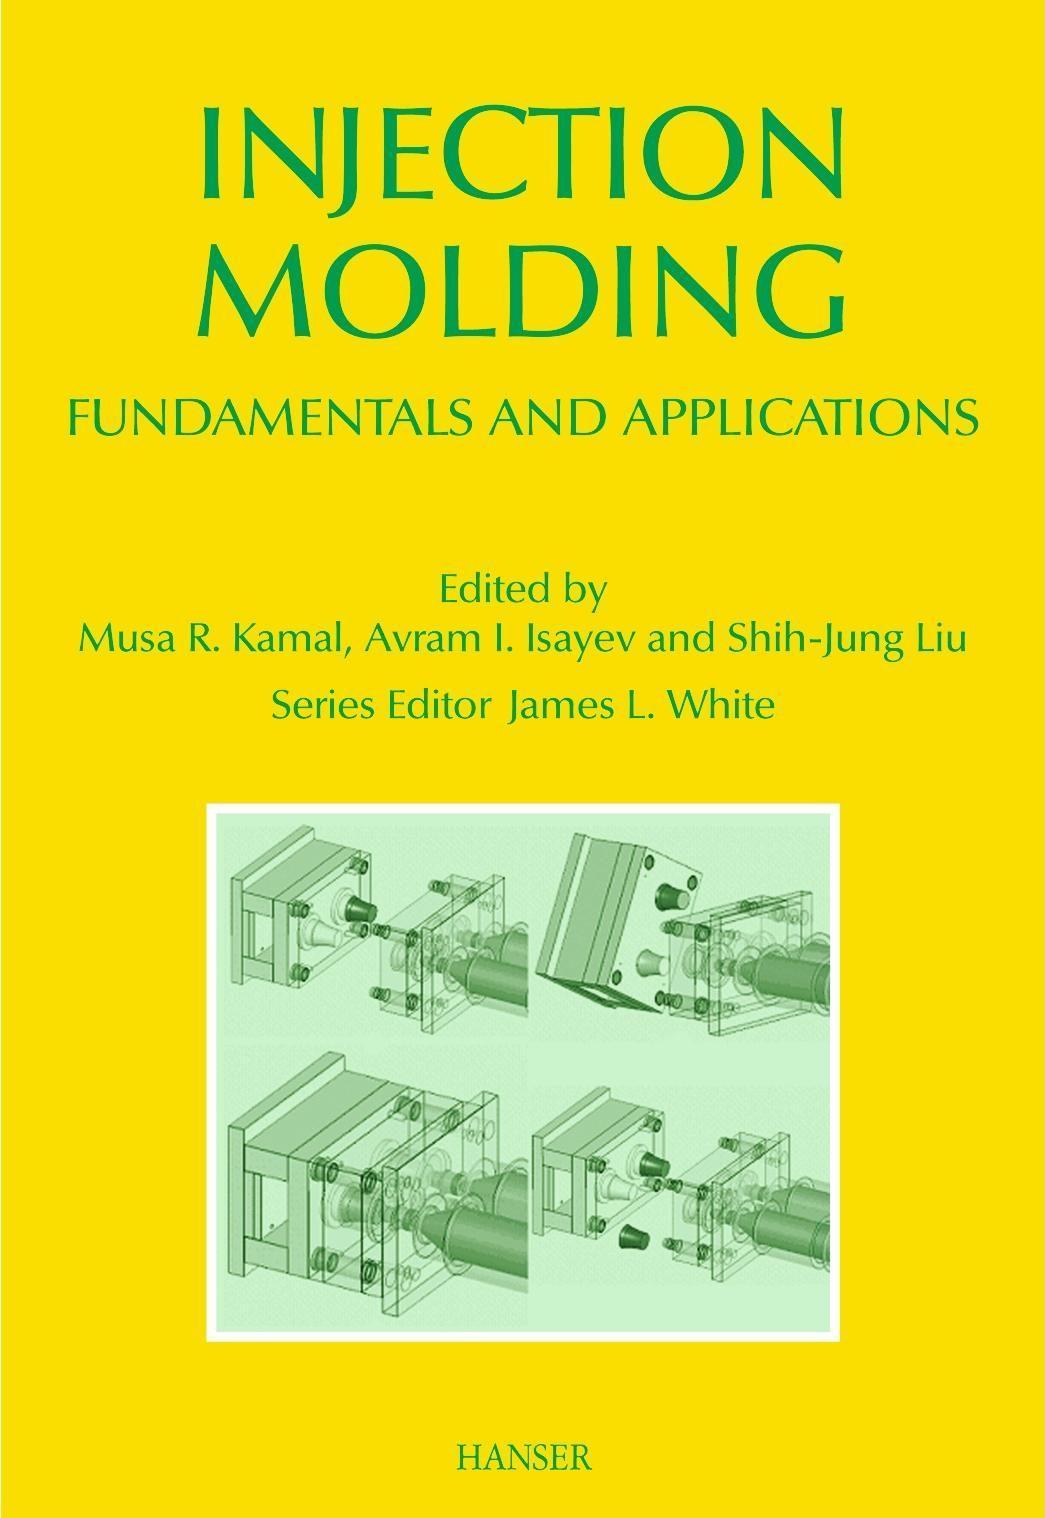 Injection Molding: Fundamentals and Applications / Musa R. Kamal / Buch / Englisch / 2009 / HANSER PUBN / EAN 9781569904343 - Kamal, Musa R.